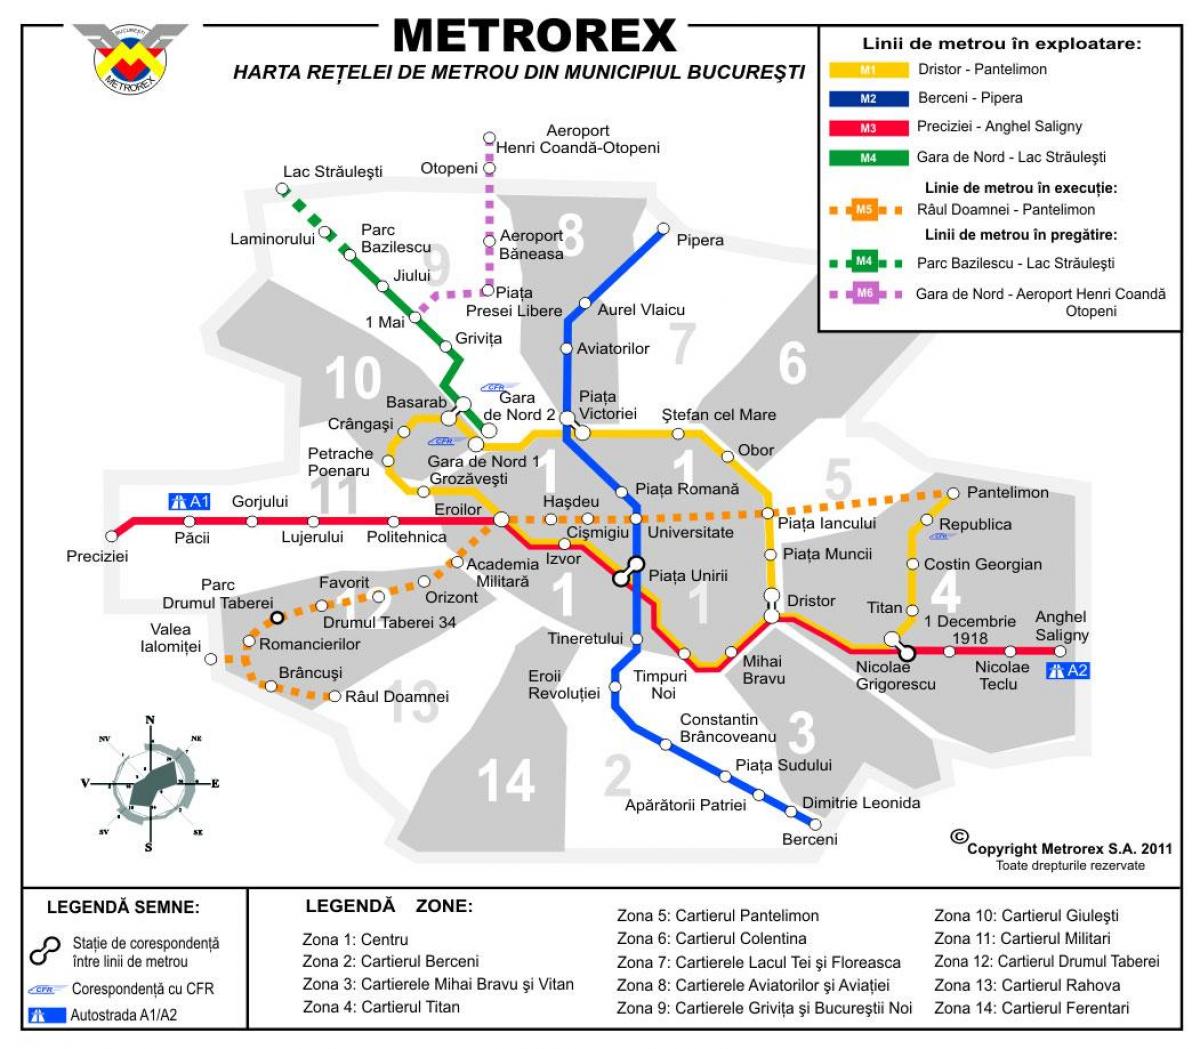 Karta metrorex 